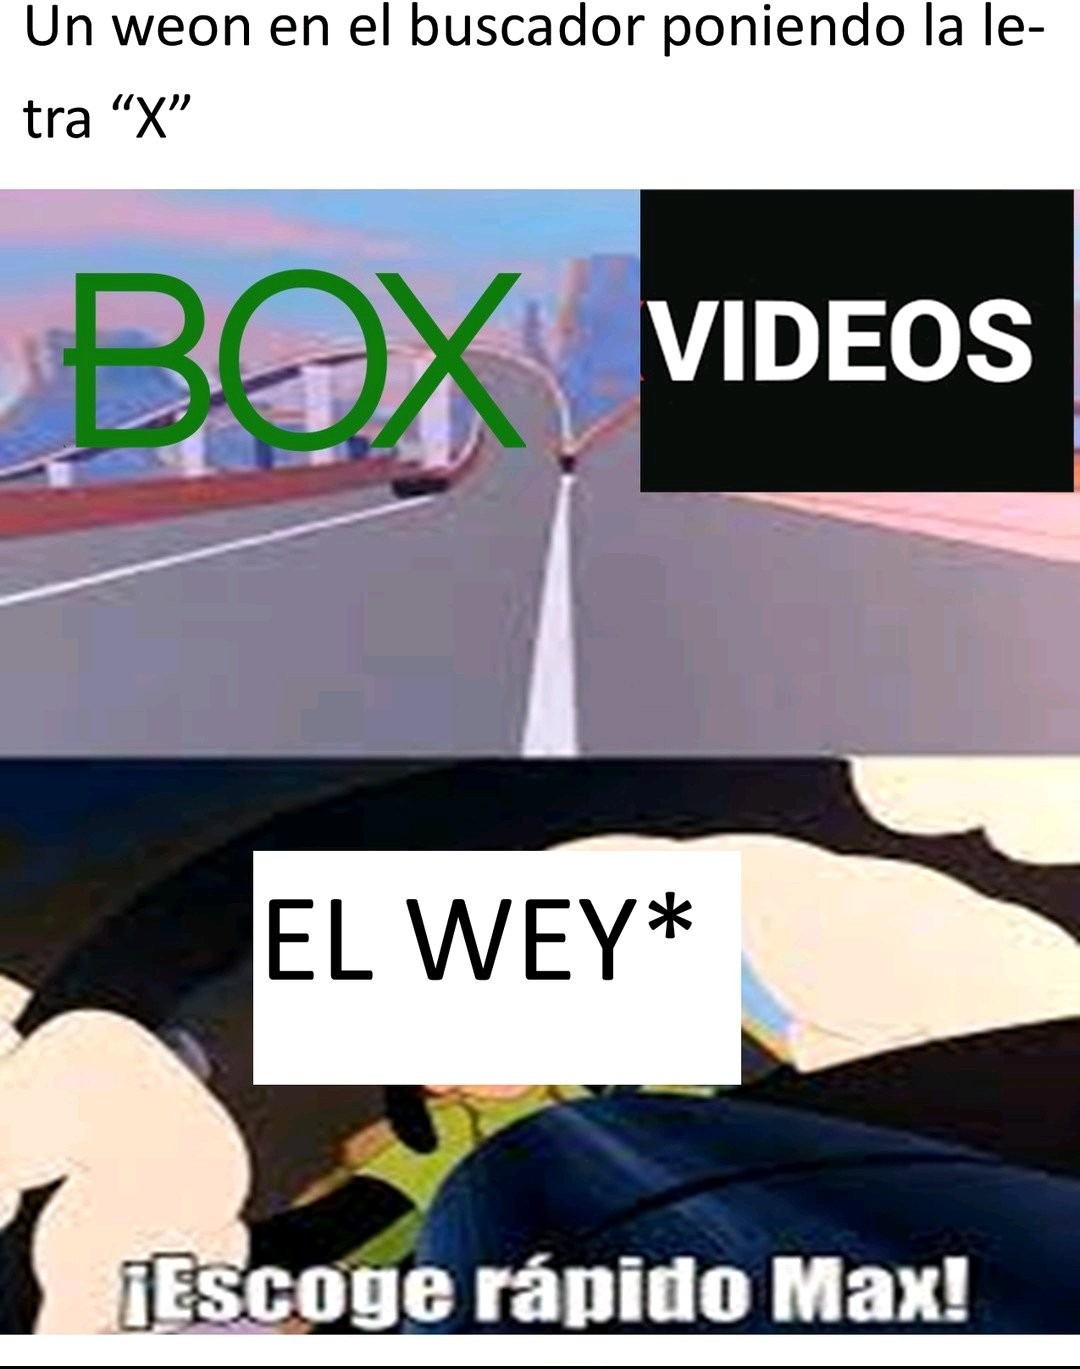 Xvideos o Xbox - meme